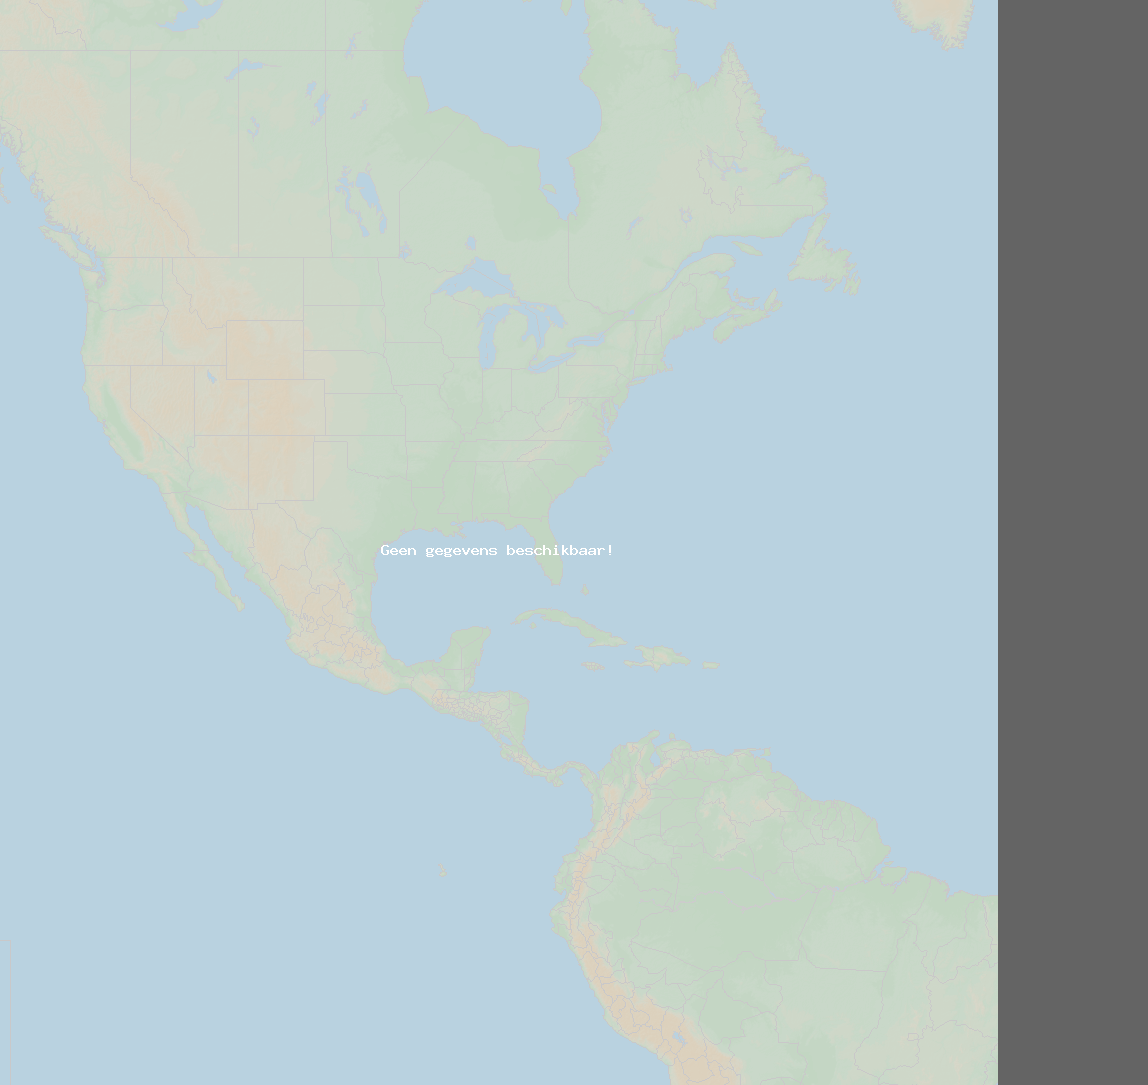 Inslagverhouding (Station Haleakala) North America 2021 